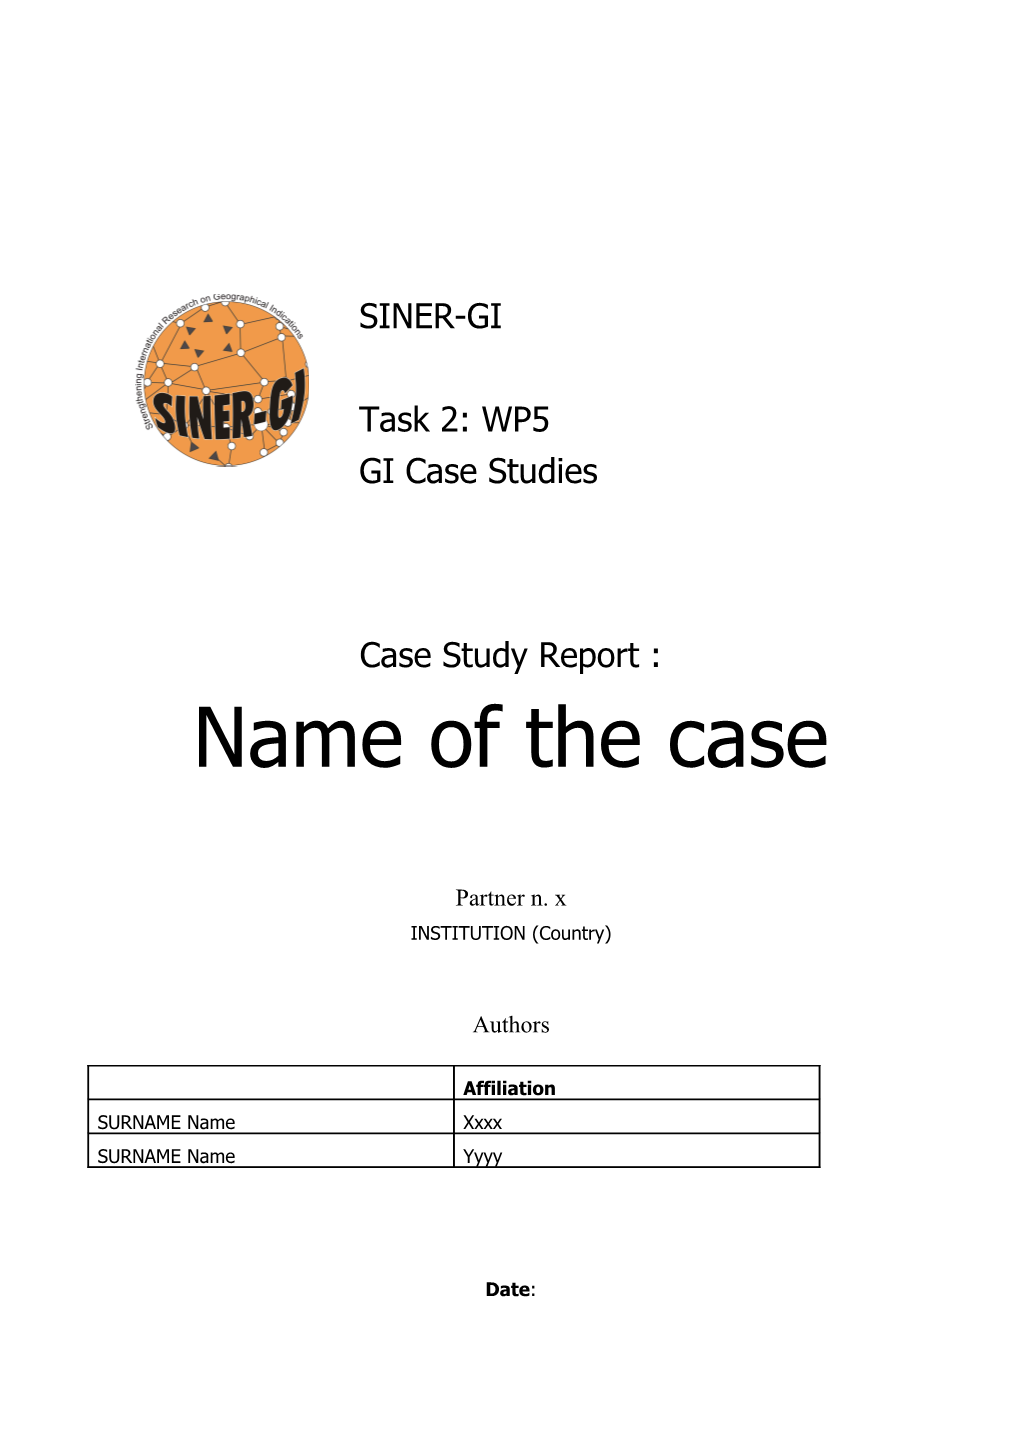 SINER-GI WP5 Template for Case Study Report - V4